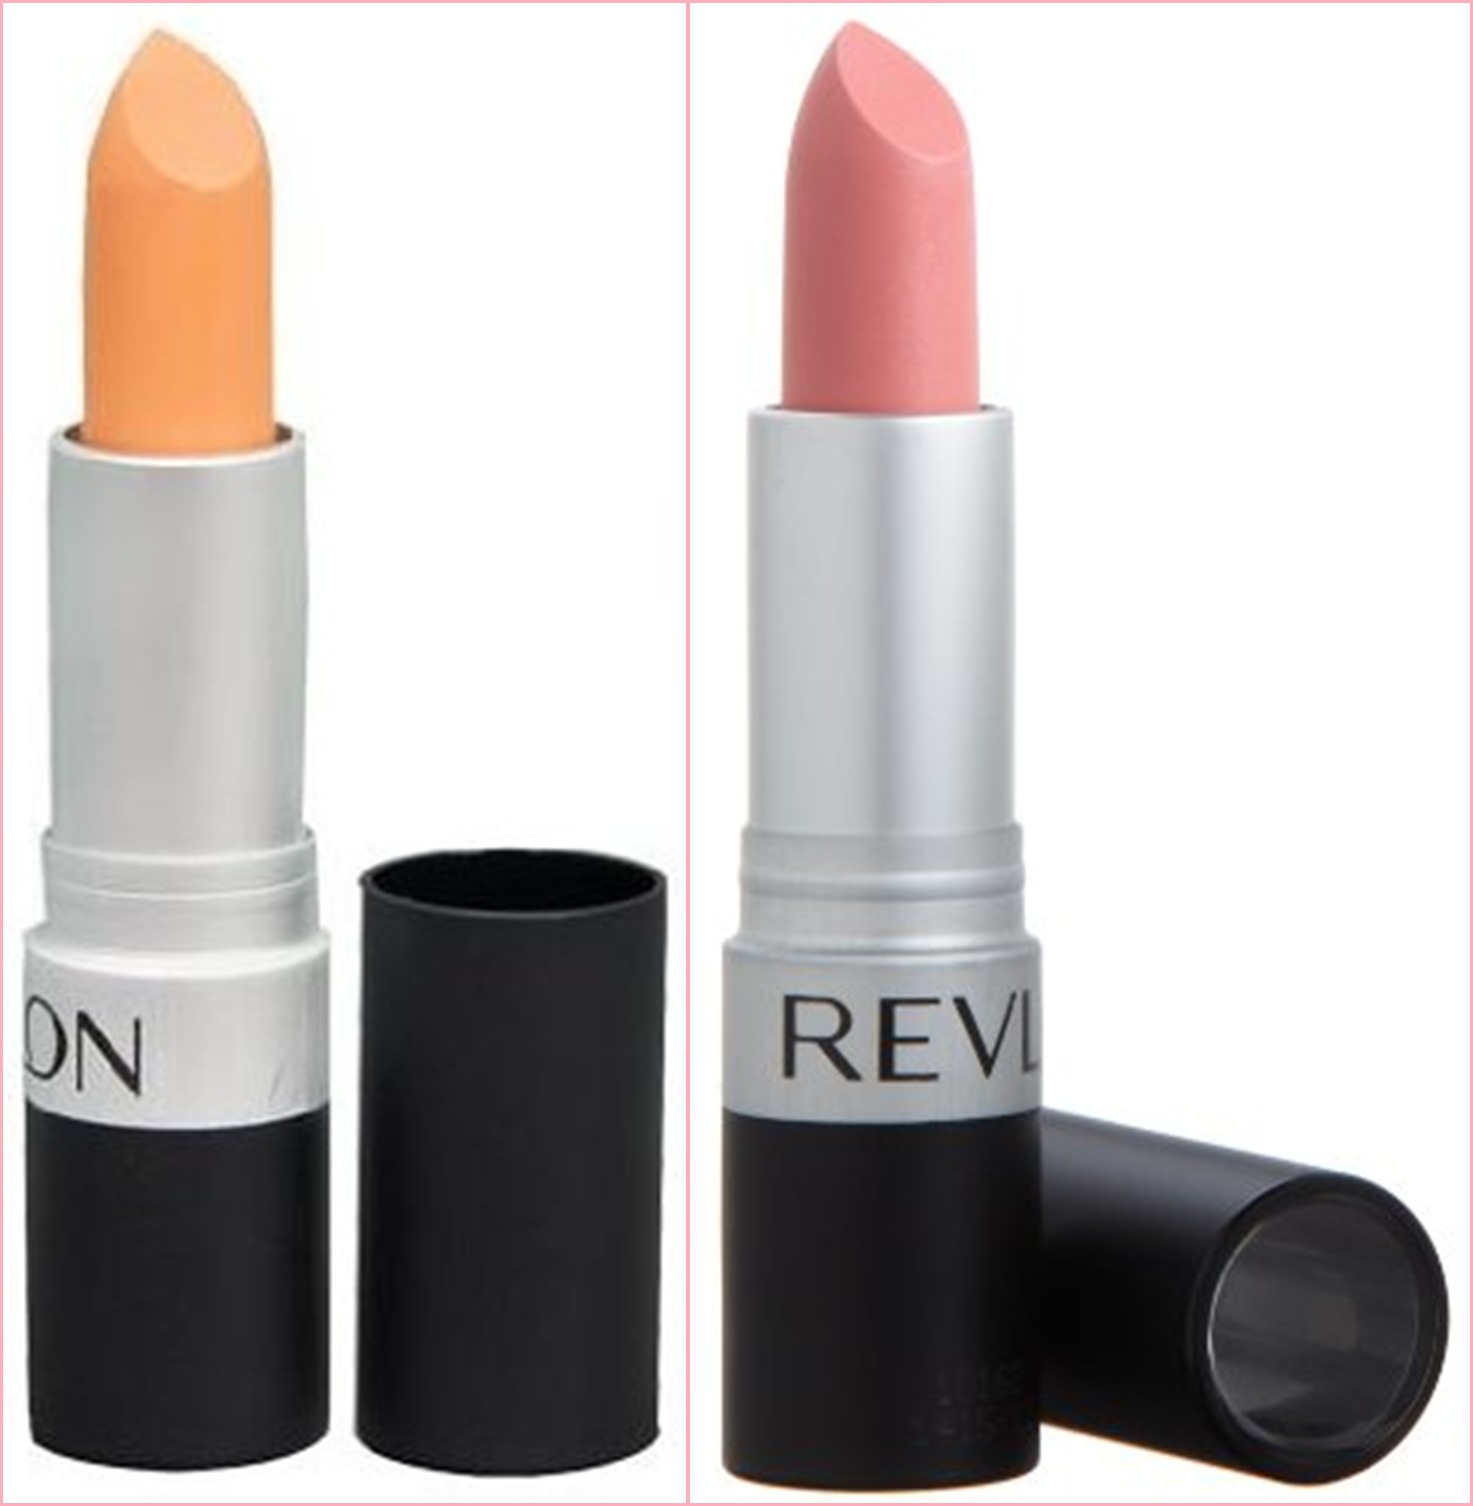 Lipstick revlon review